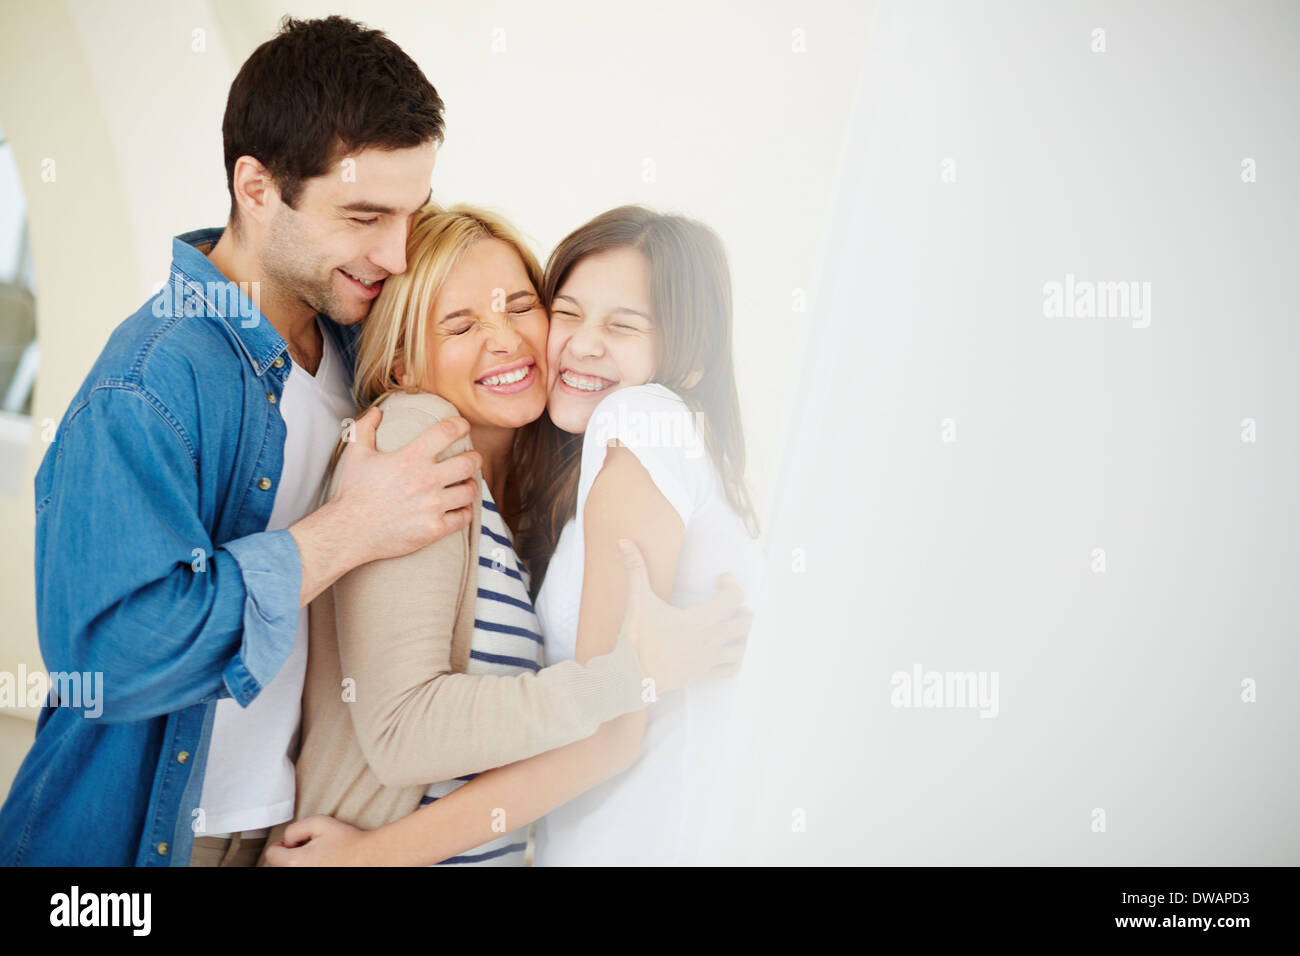 Portrait of joyful family of three in embrace Stock Photo